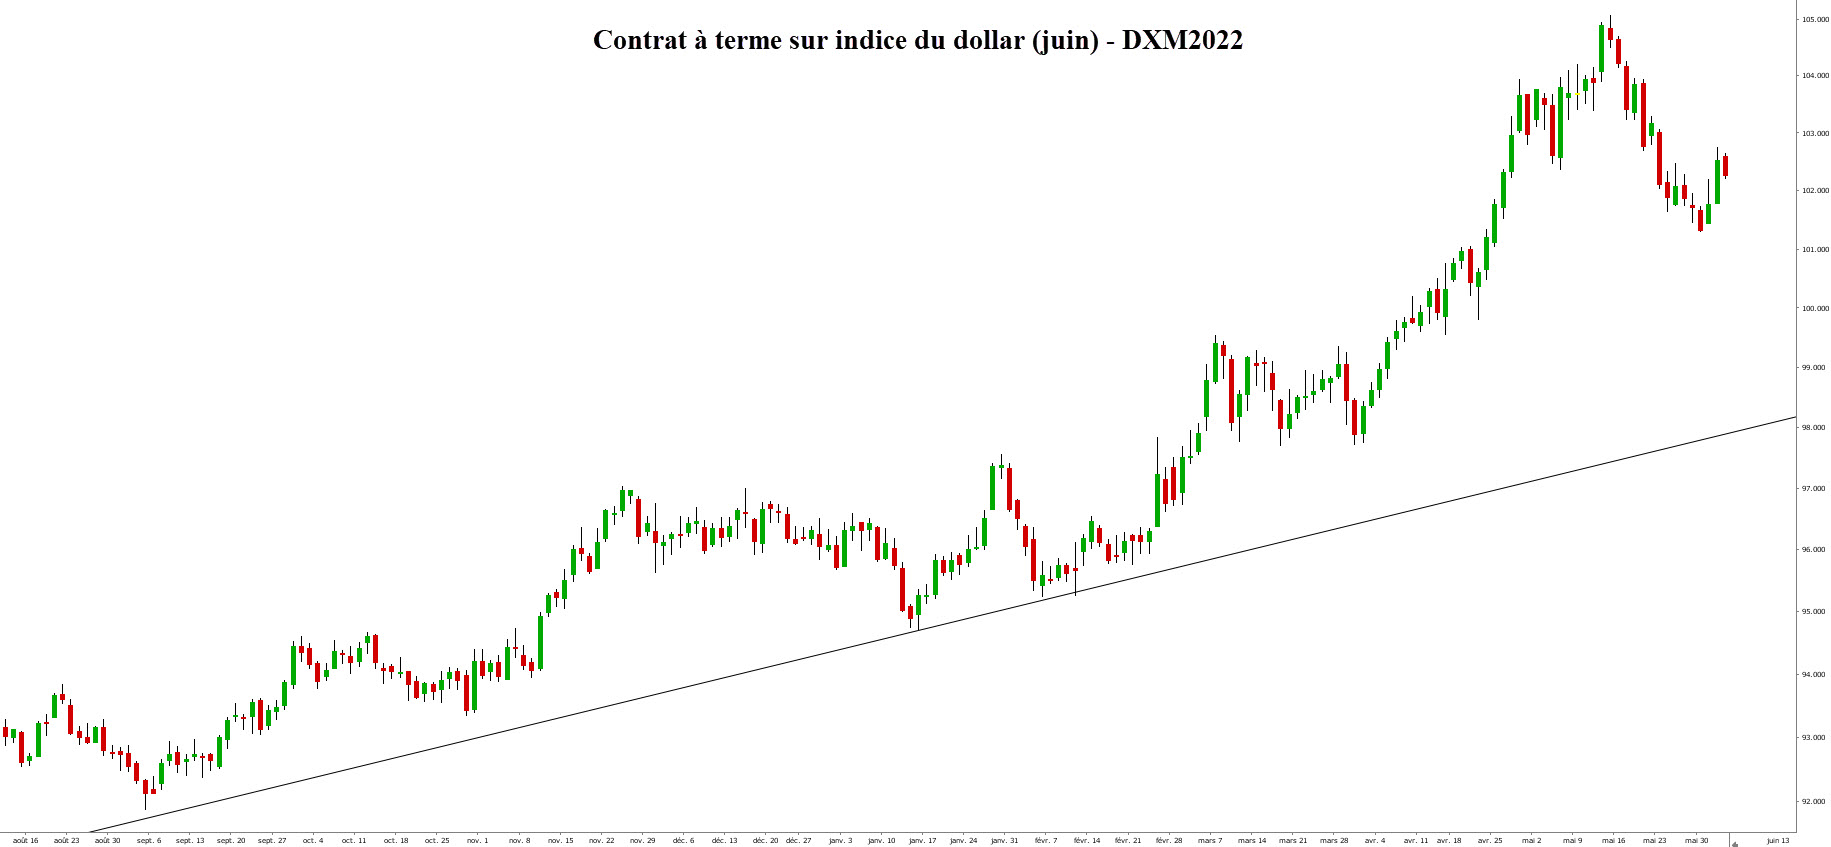 La chronique LYNX BROKER 02062022 - graphique future indice dollar